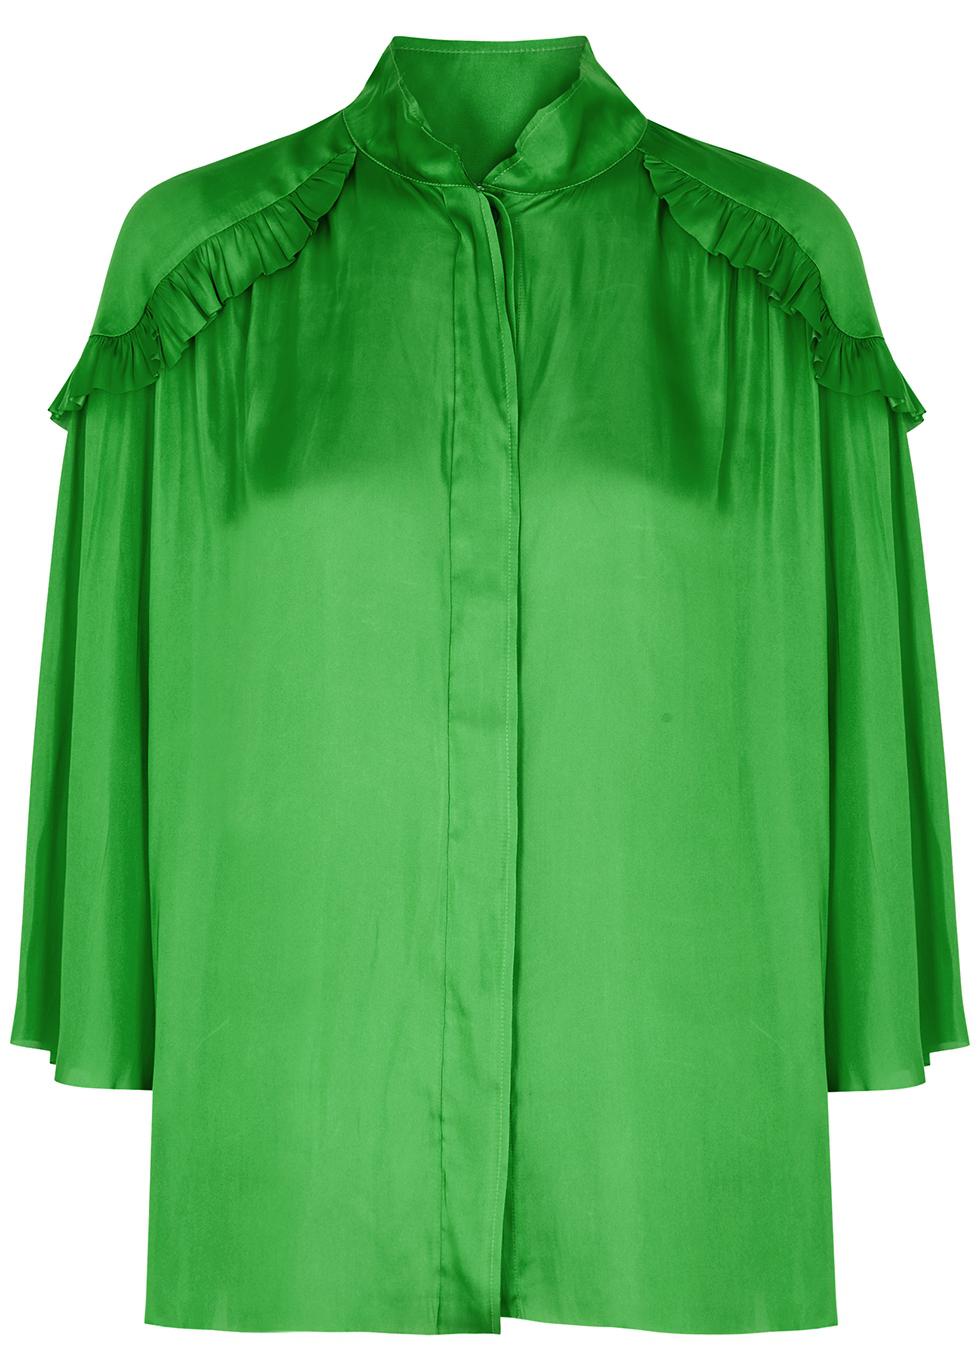 Green ruffle-trimmed satin blouse by DAY BIRGER ET MIKKELSEN